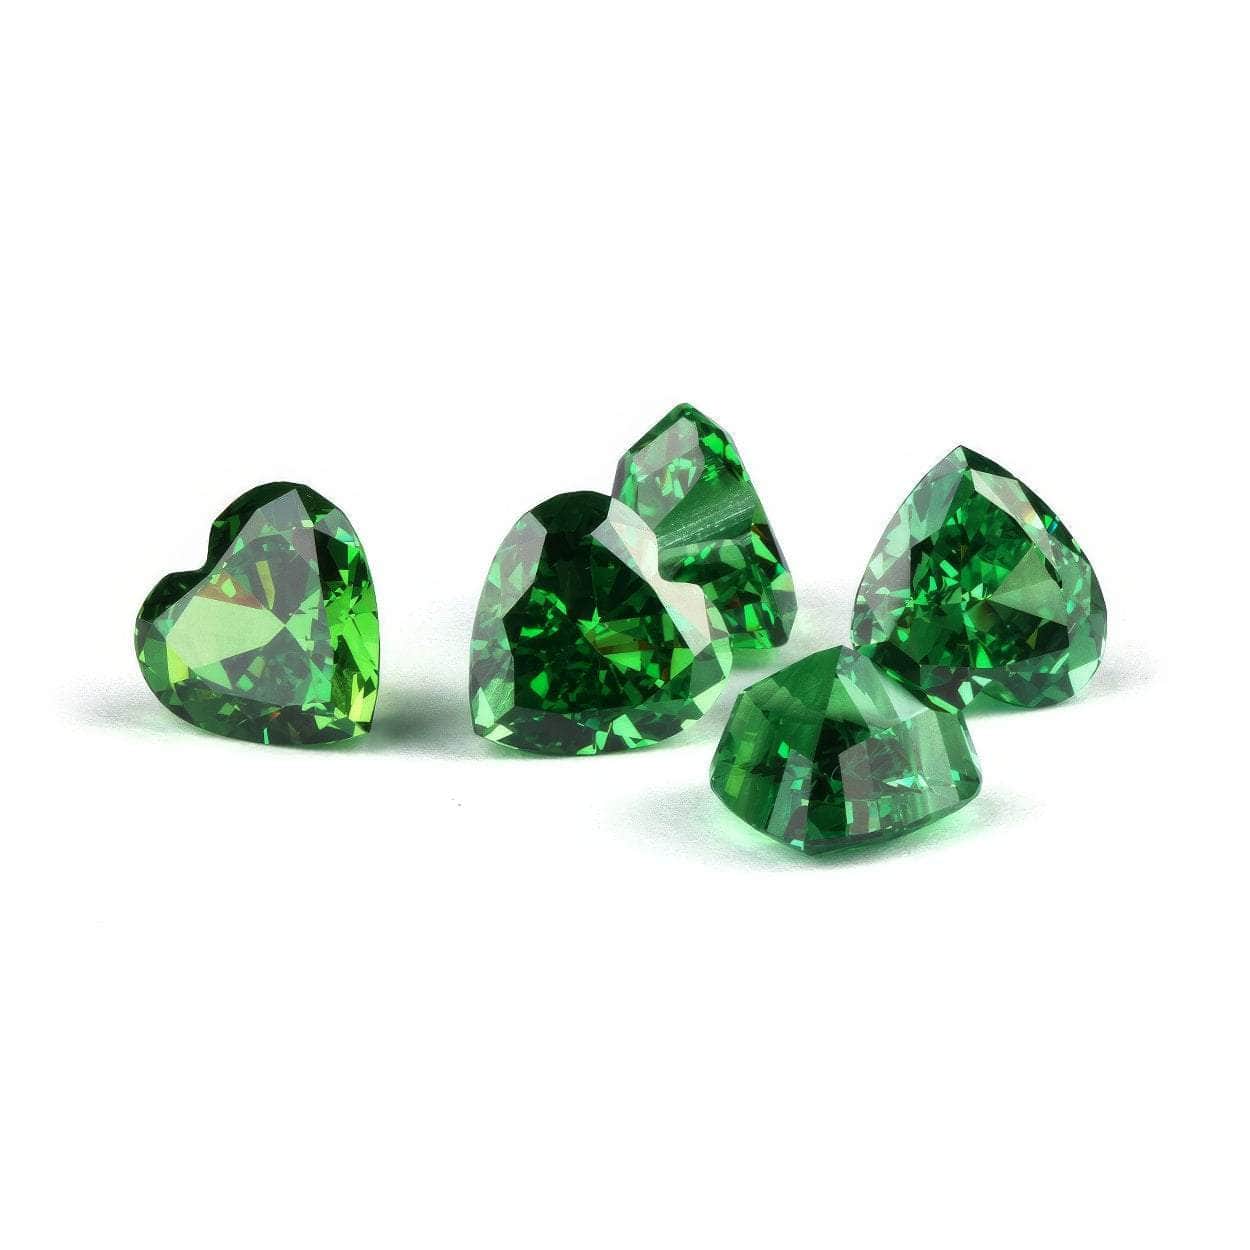 3 Set Of Emerald Heart Cut Lab Grown Diamond Gemstone 5*5mm / Emerald / Heart